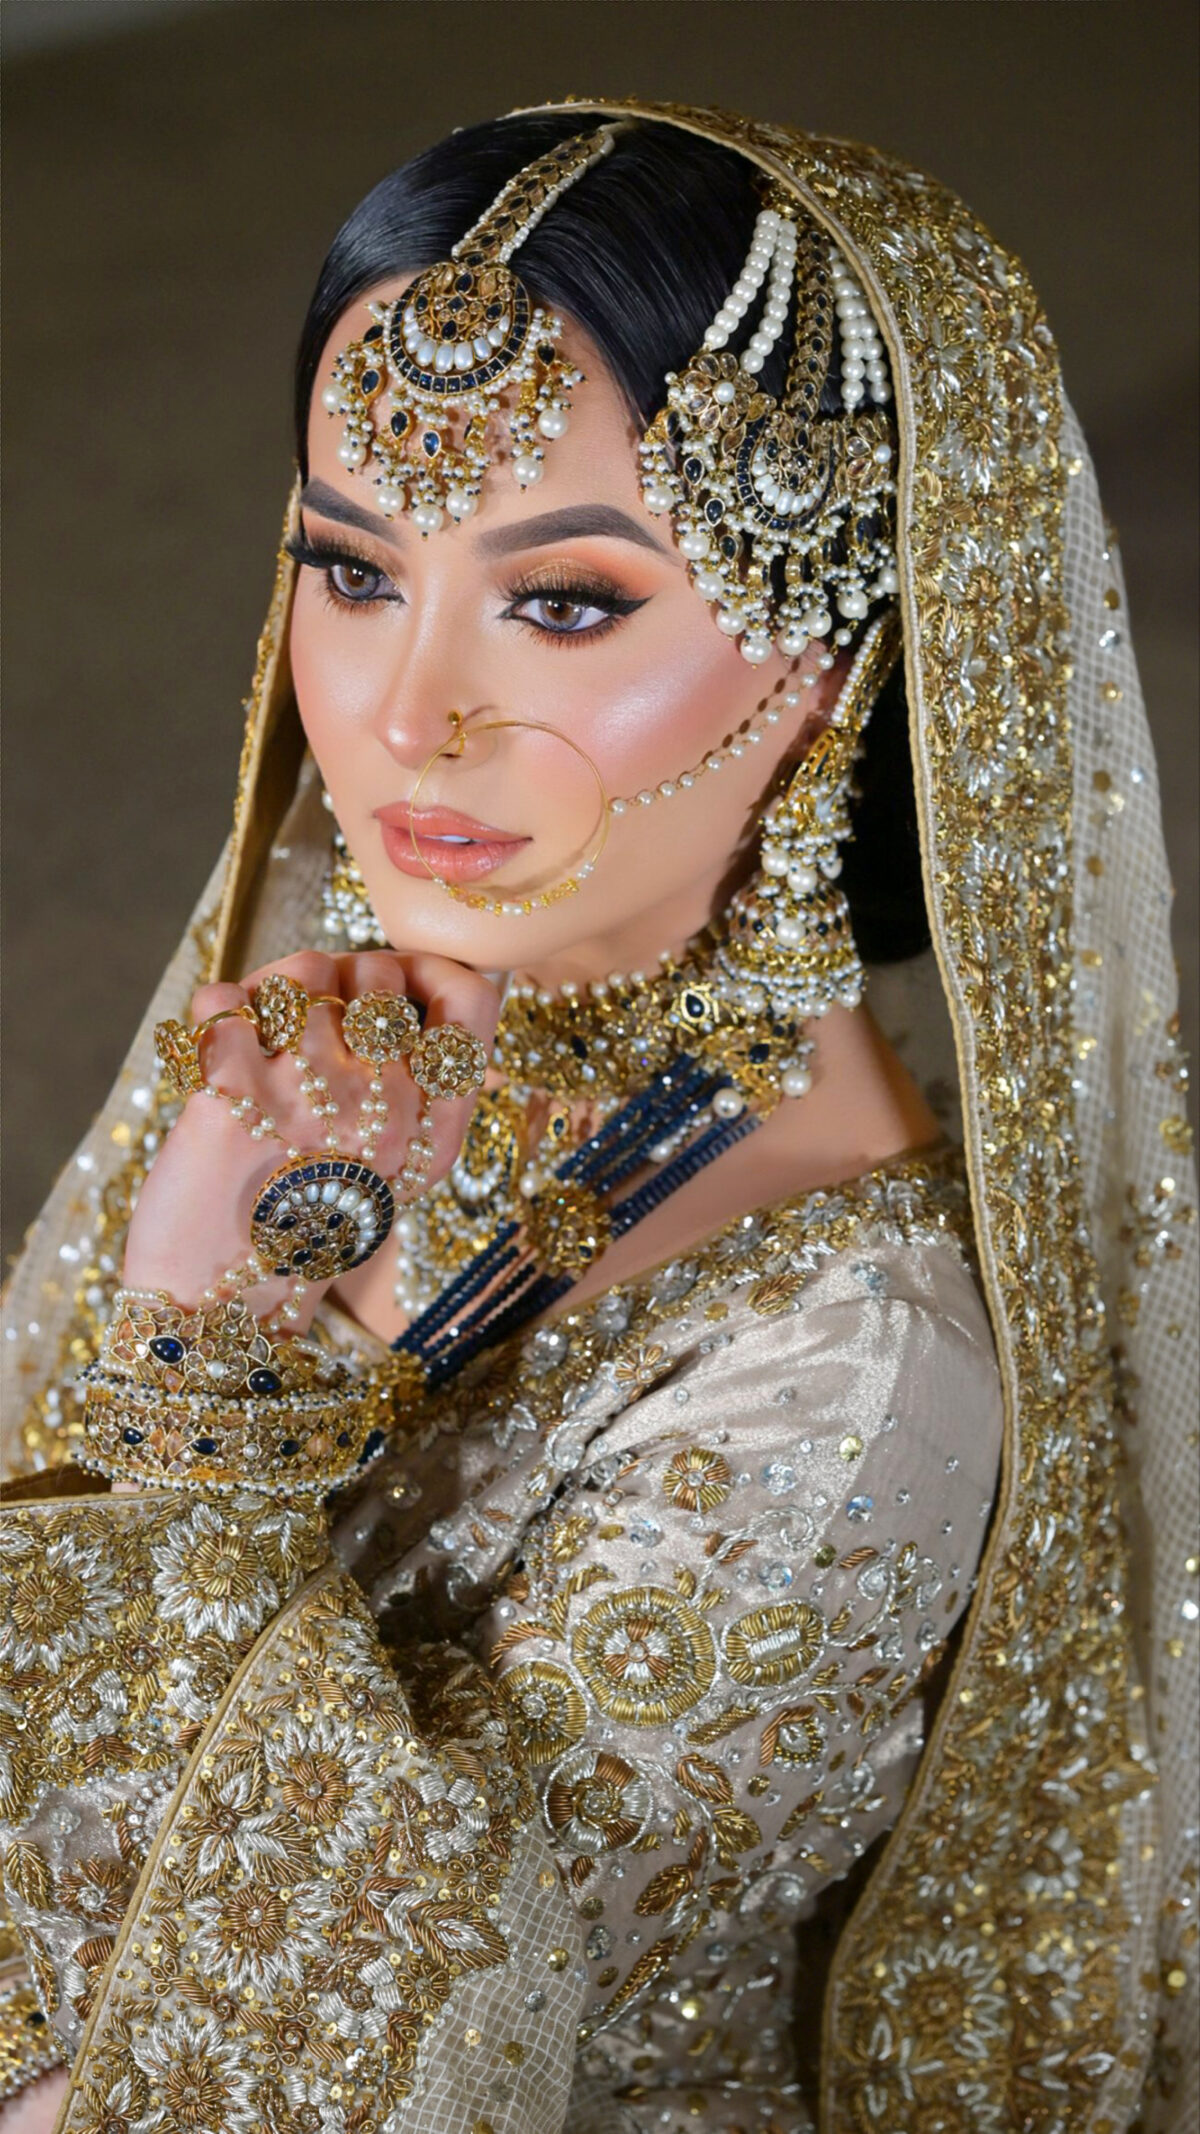 Madiha Khan: Elevating Natural Beauty Through Makeup Artistry